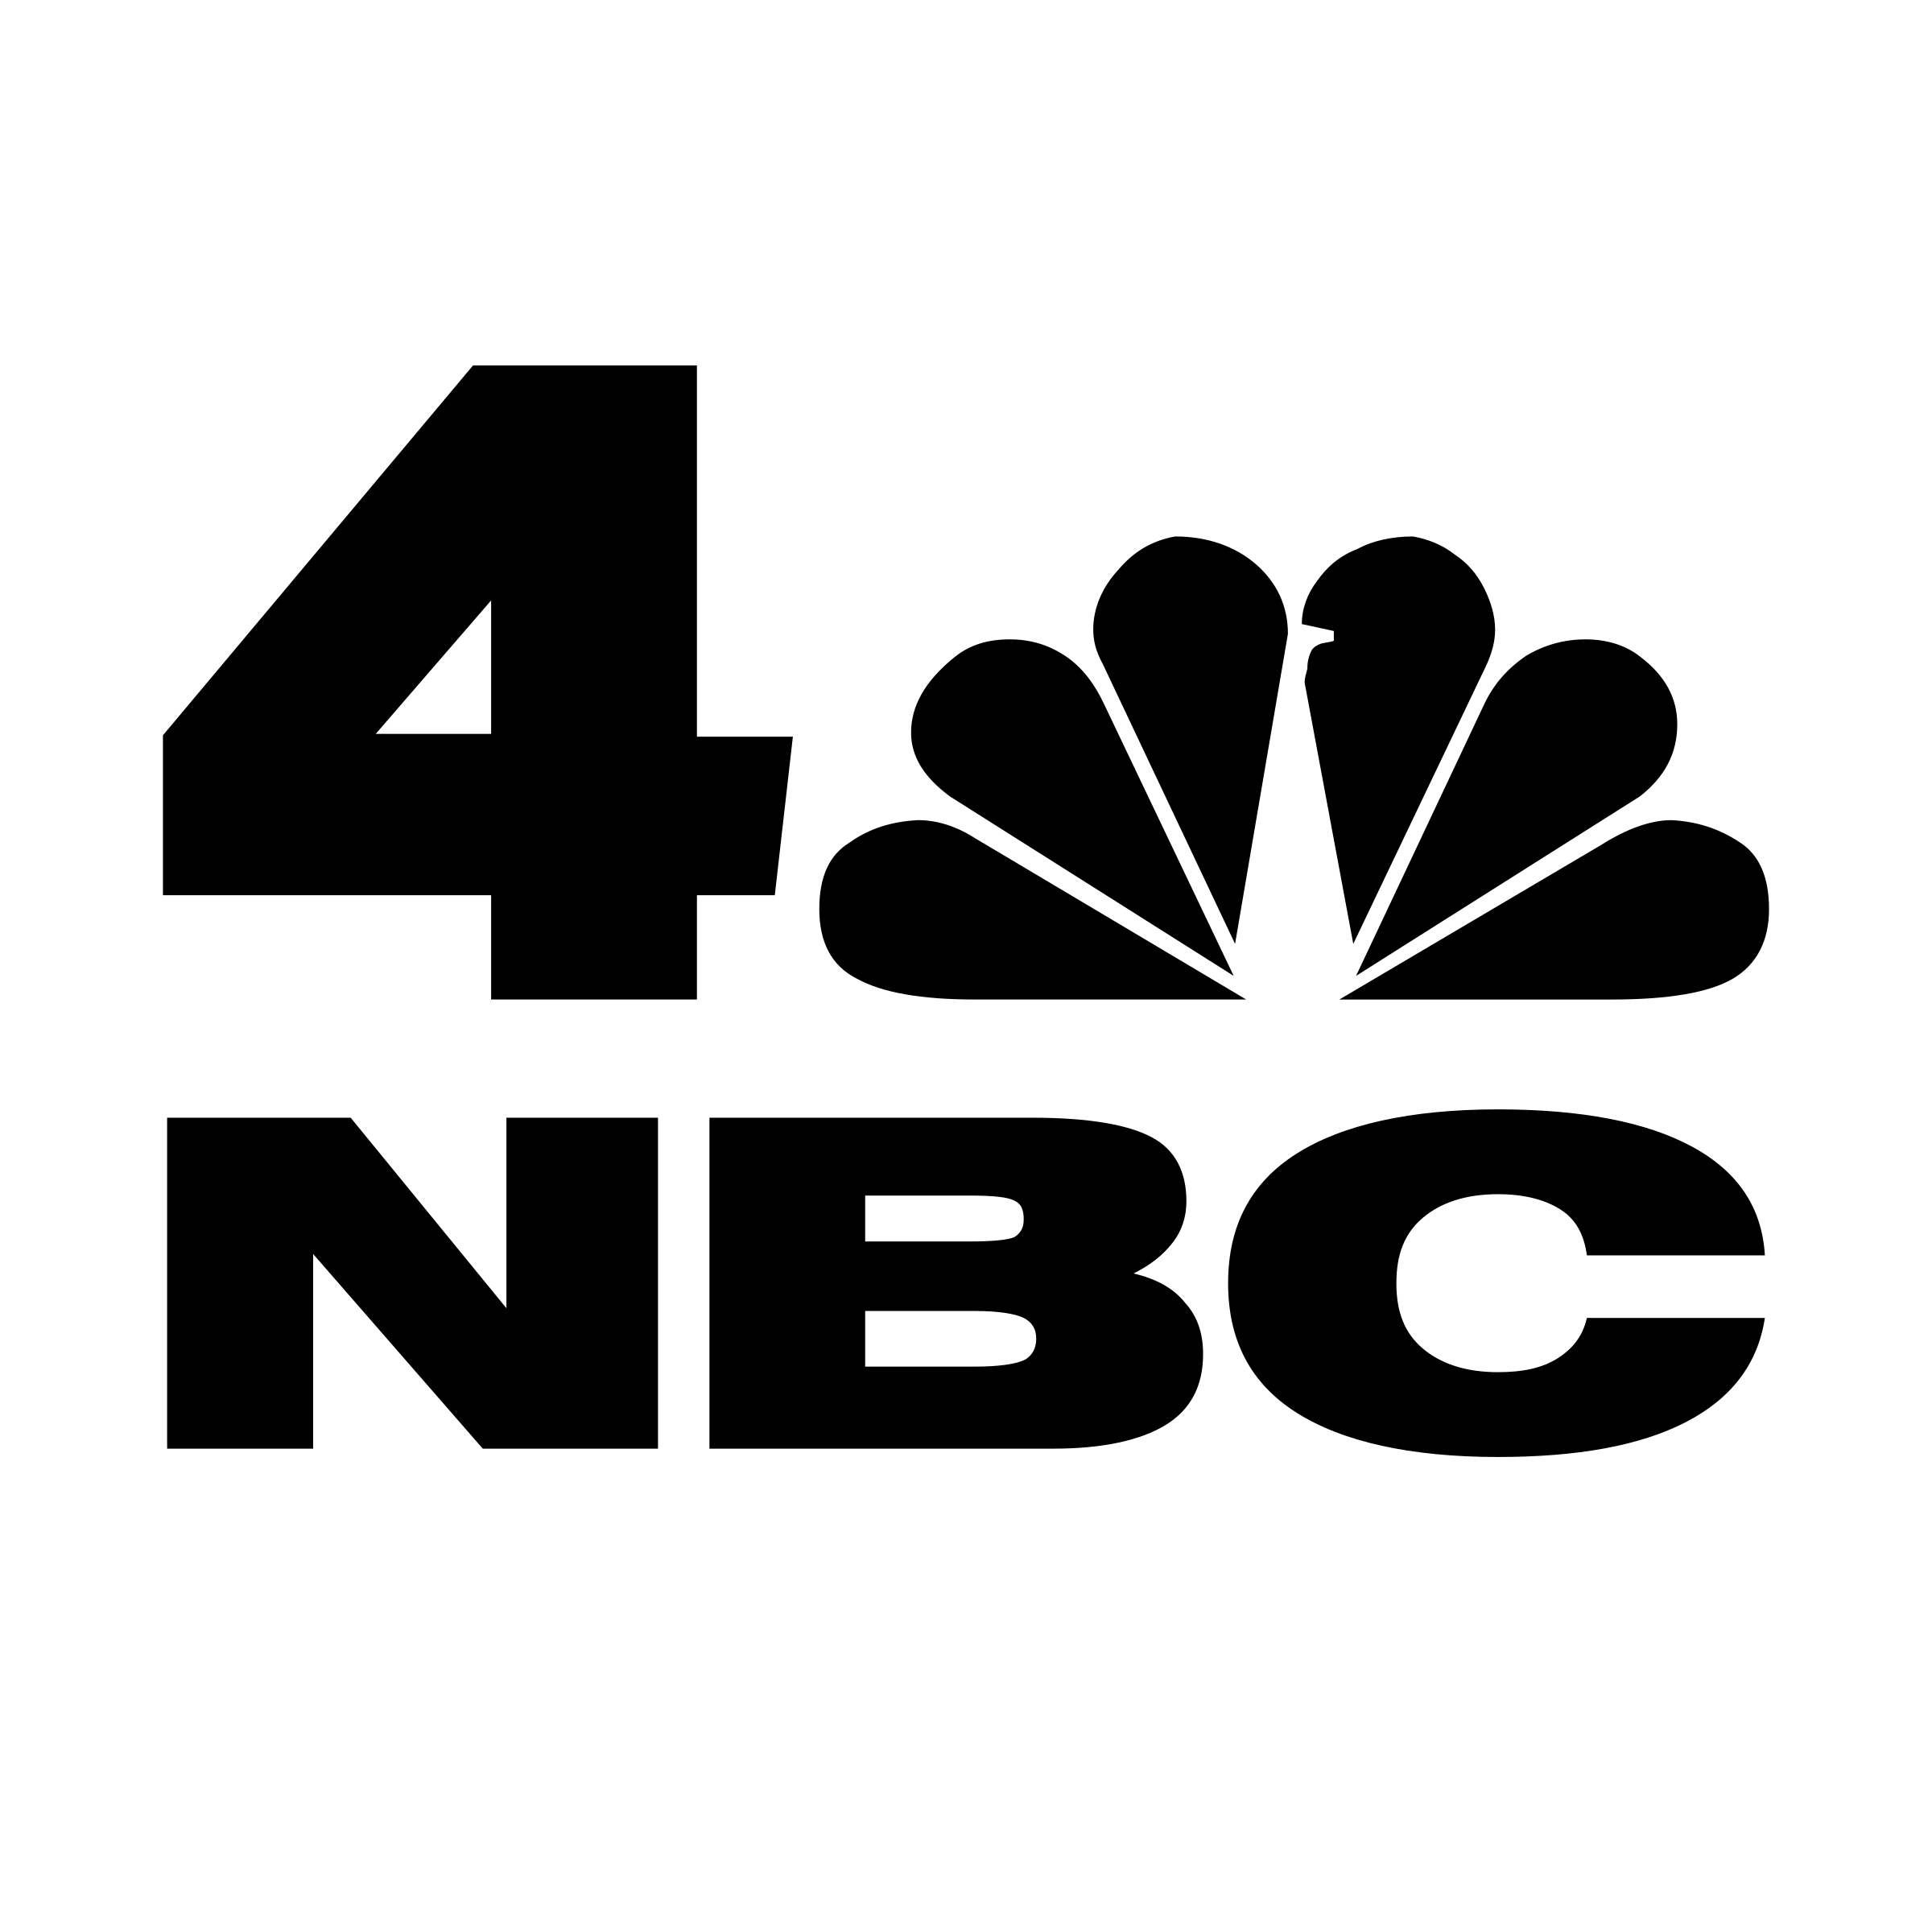 4-nbc-logo-png-transparent